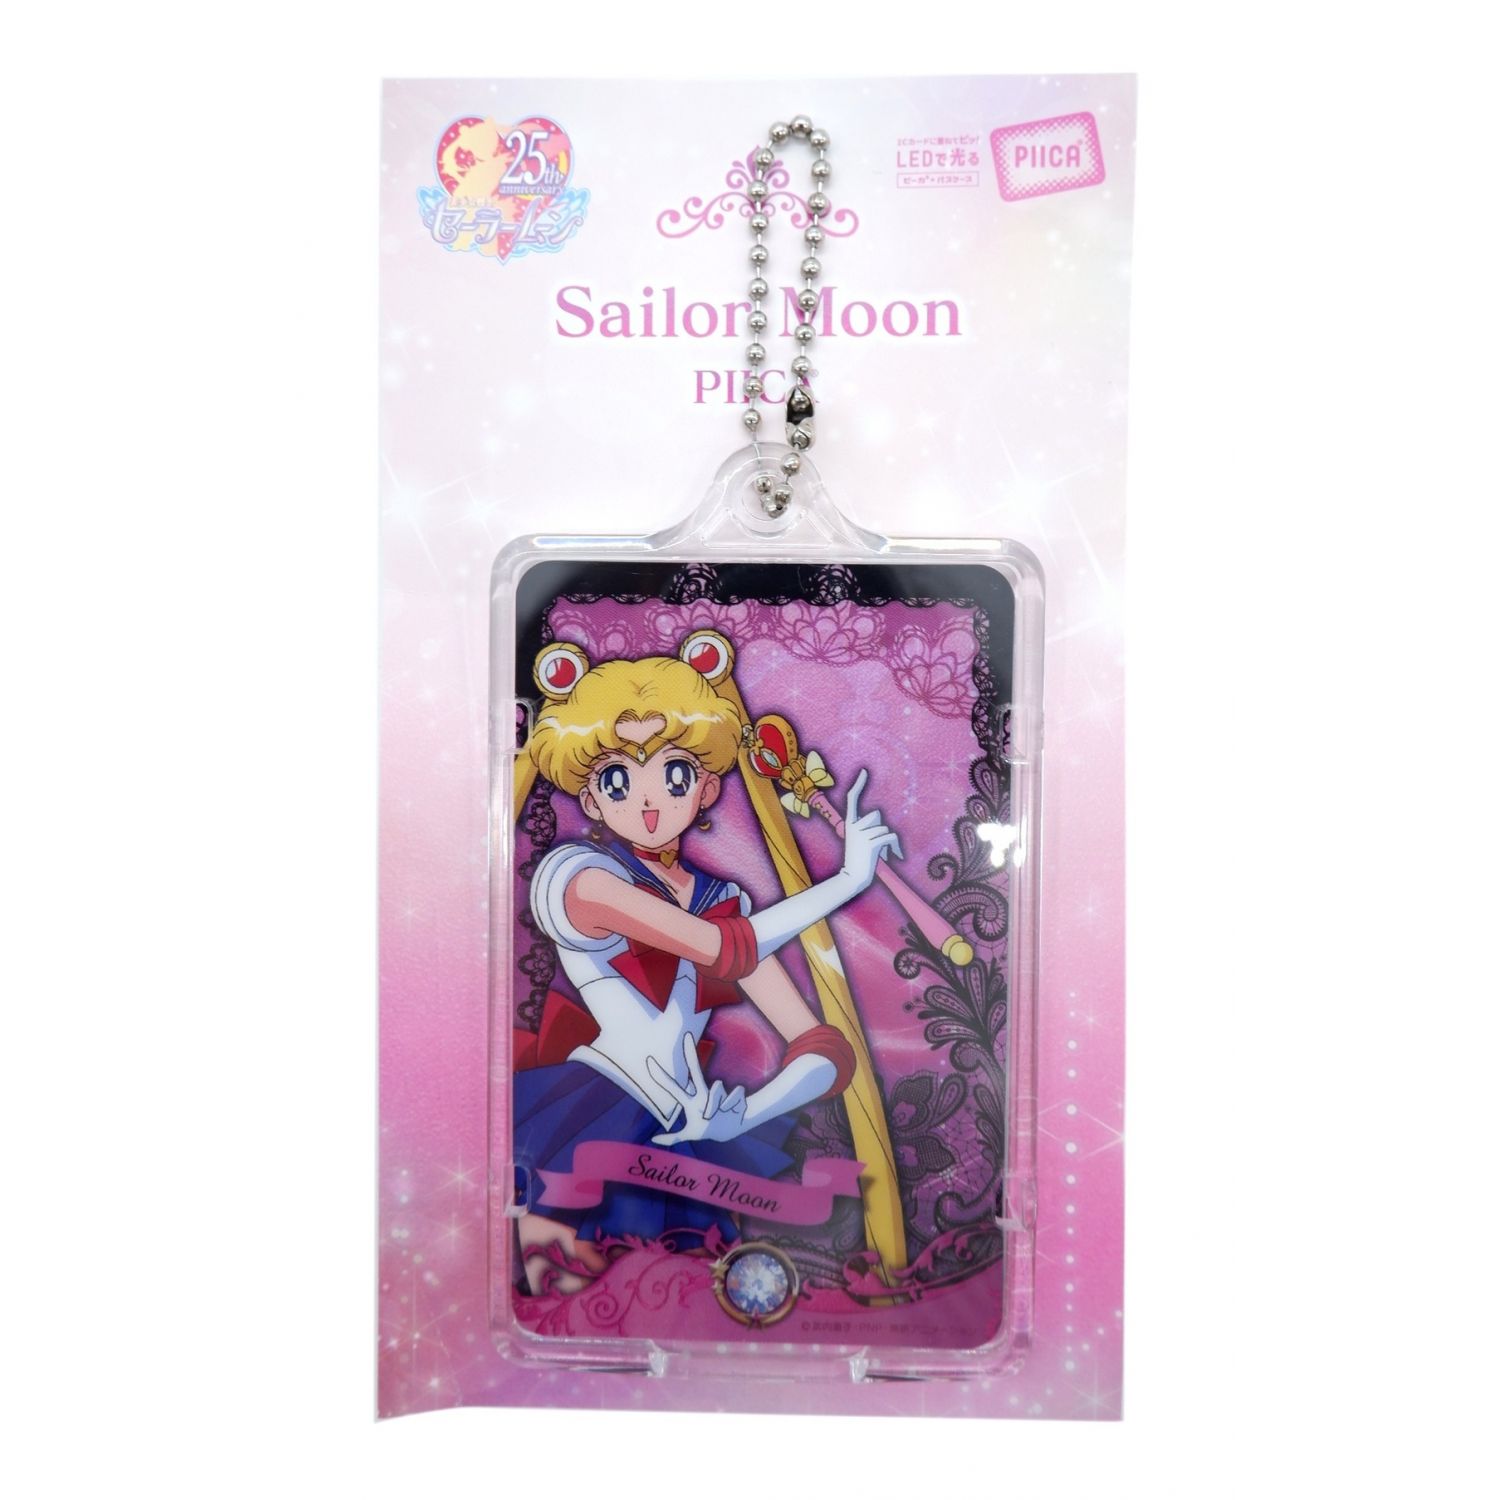 Sailor Moon PIICA